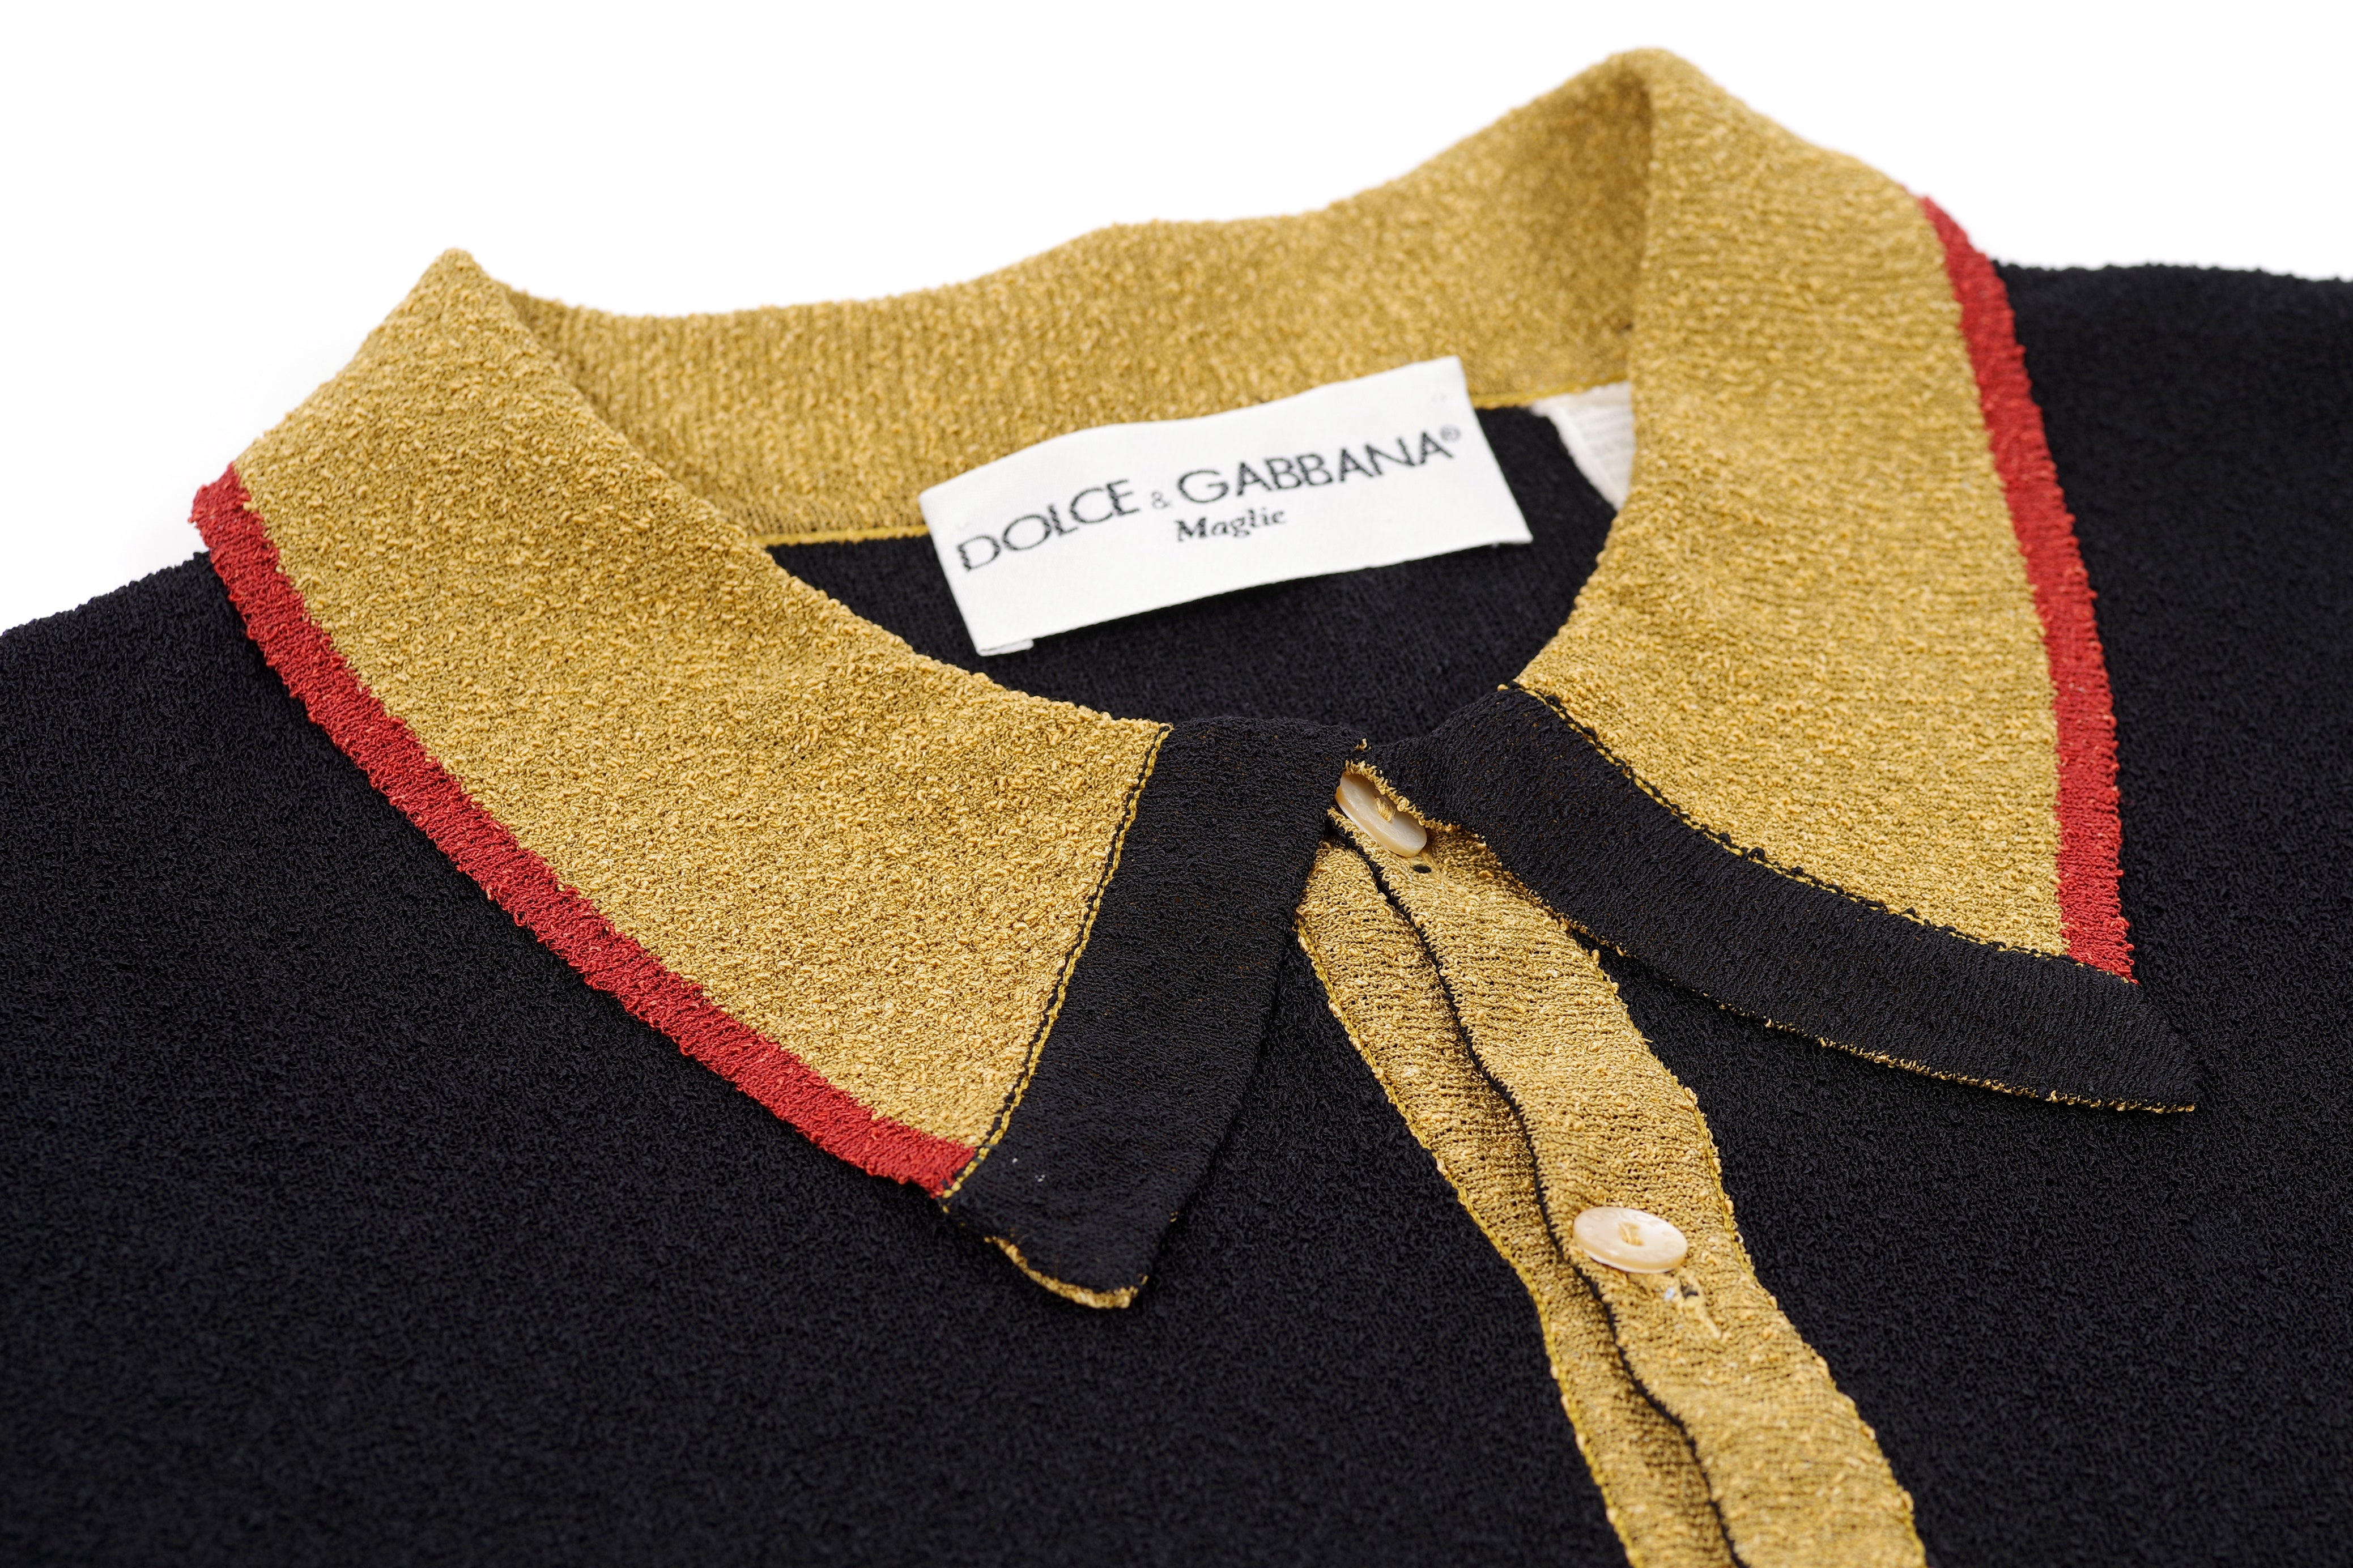 Dolce & Gabbana Maglie Vintage Knit Button Up Shirt, Men's M